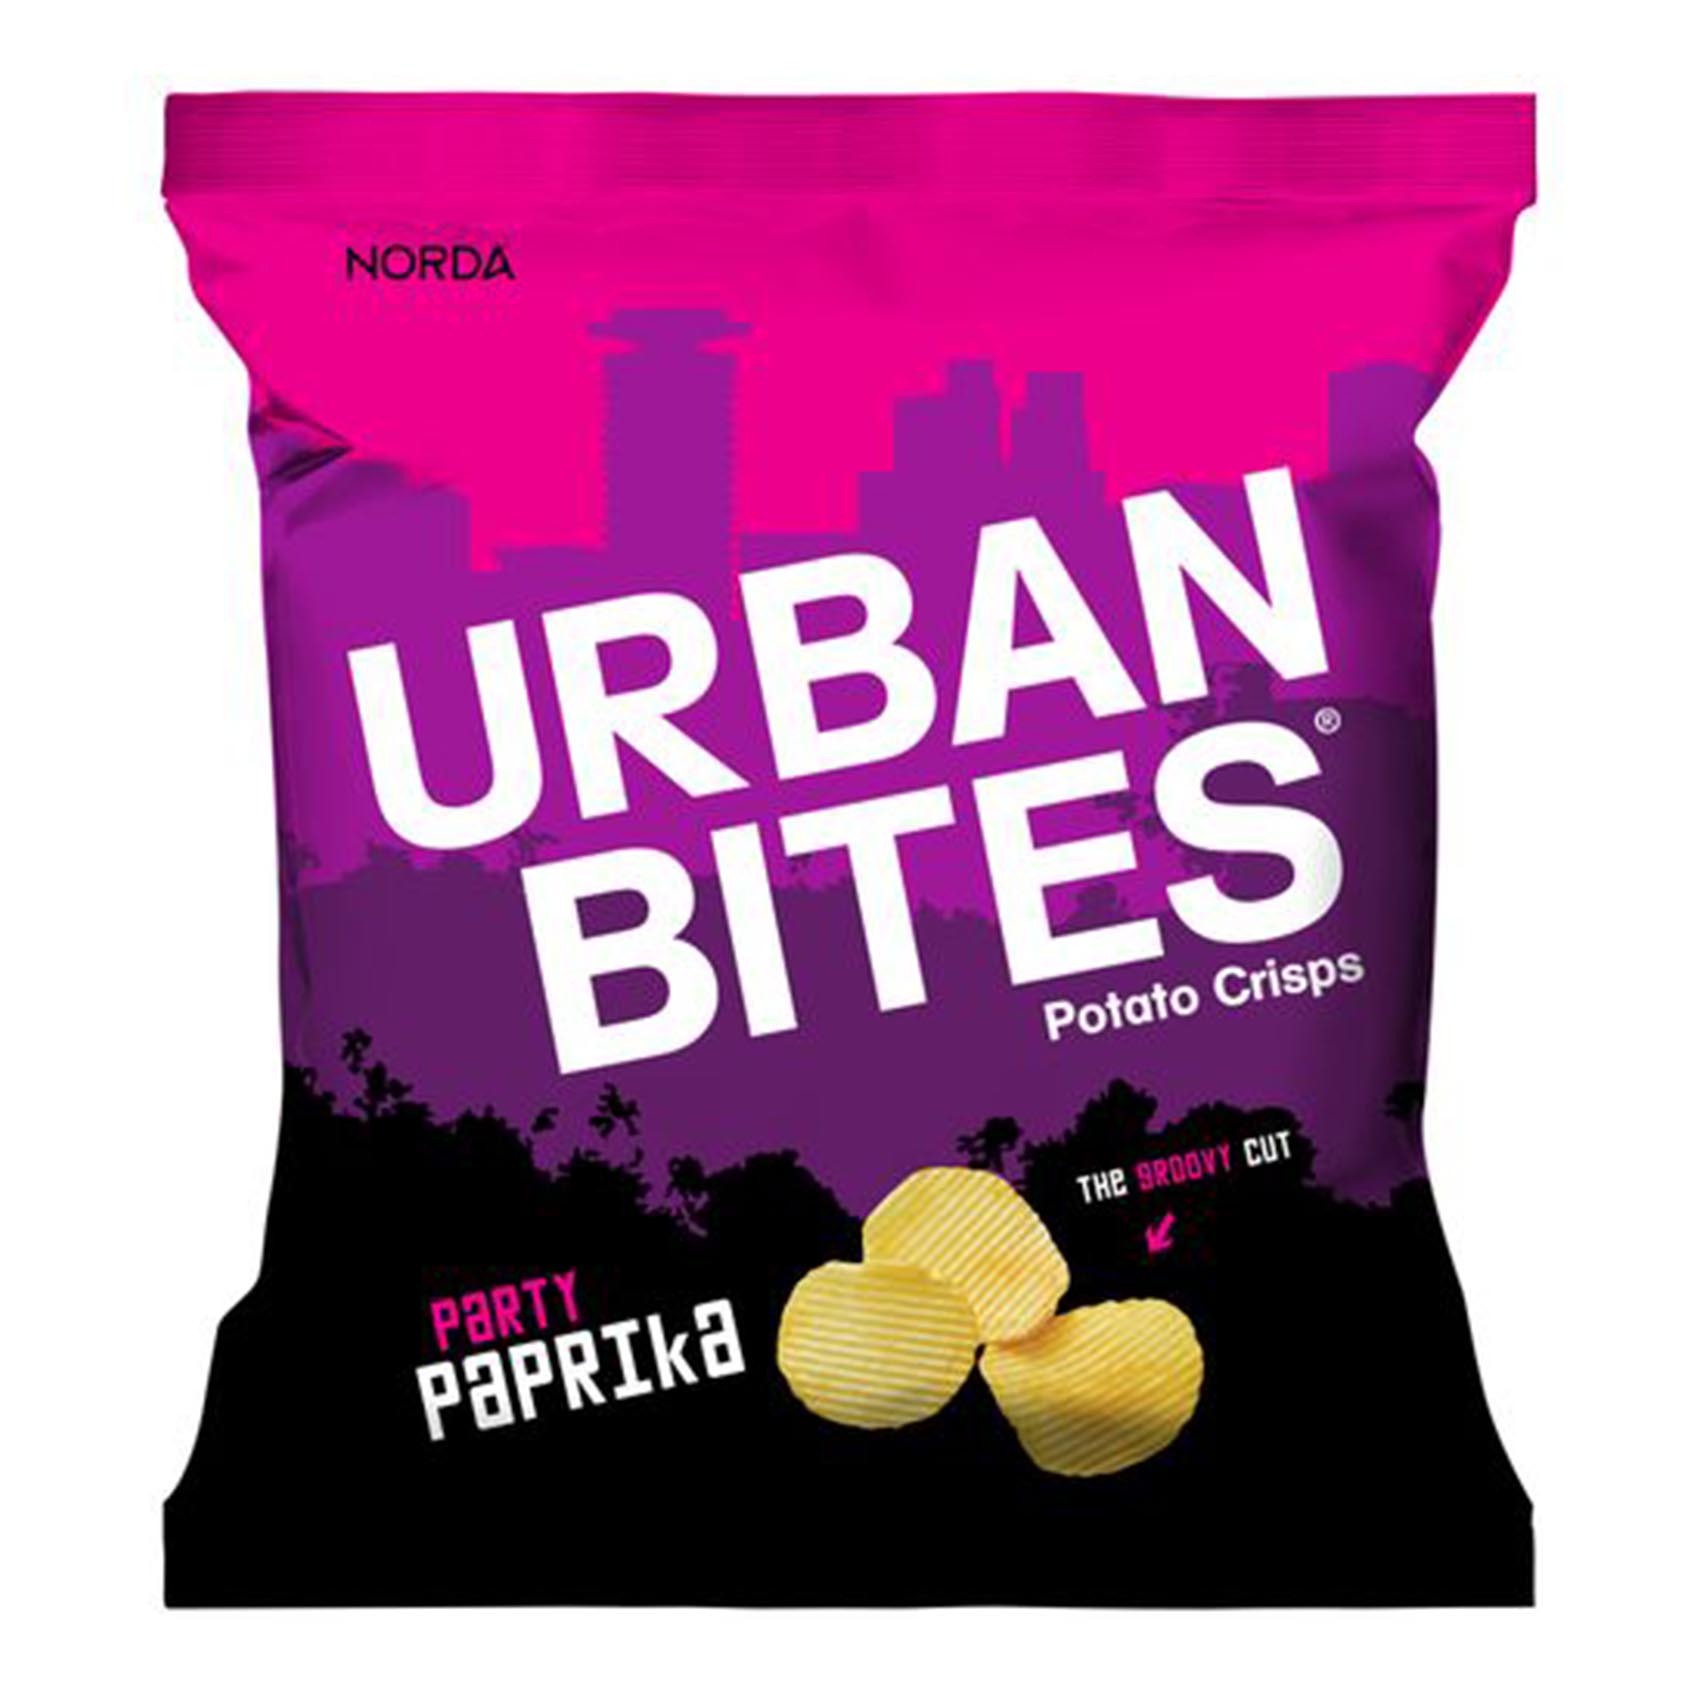 Norda Urban Bites Party Paprika Potato Crisps 30G